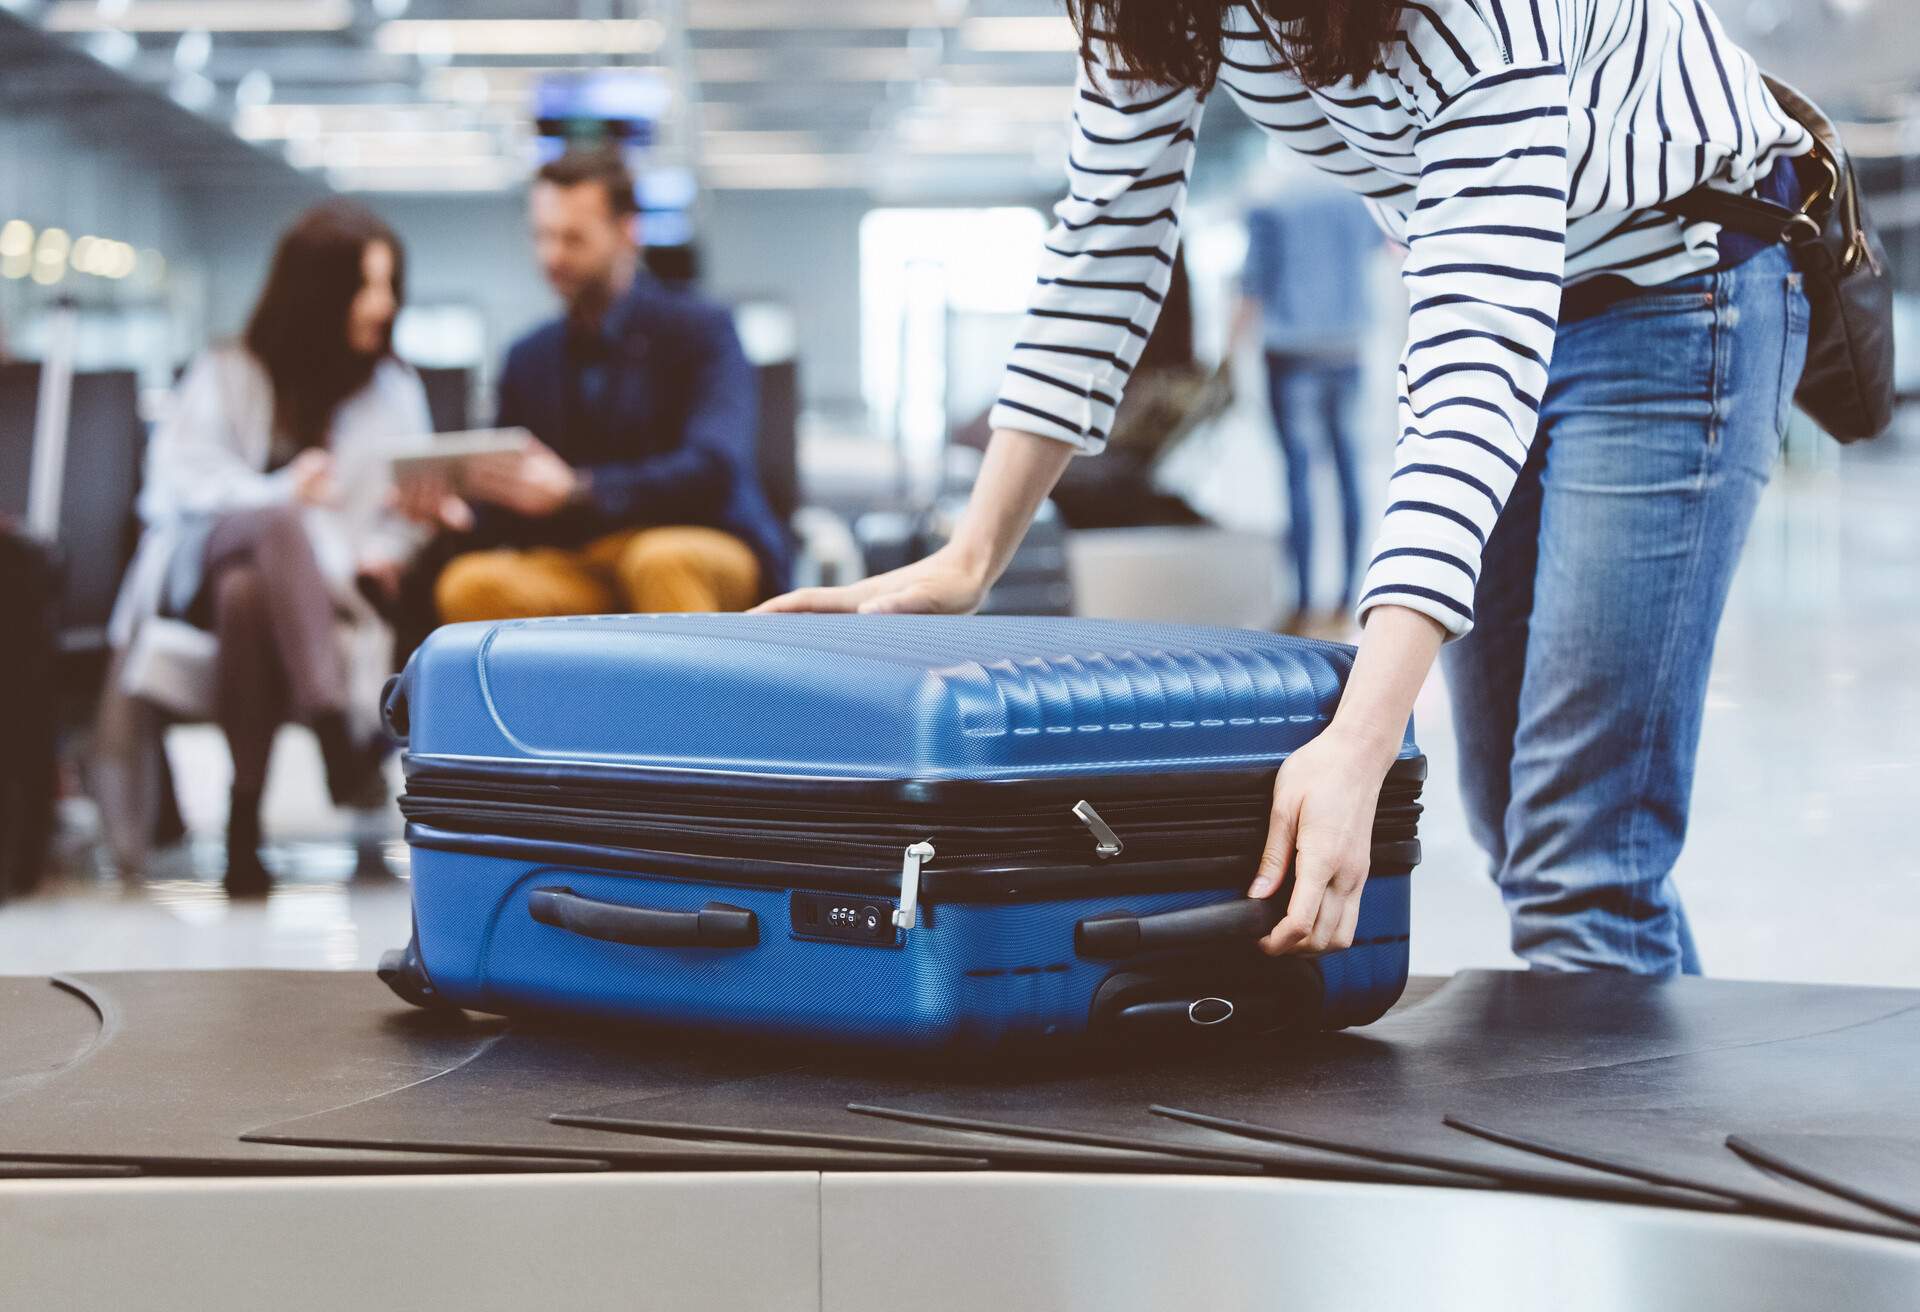 theme_airport_flight_luggage_hold-bag_baggage-claim_people